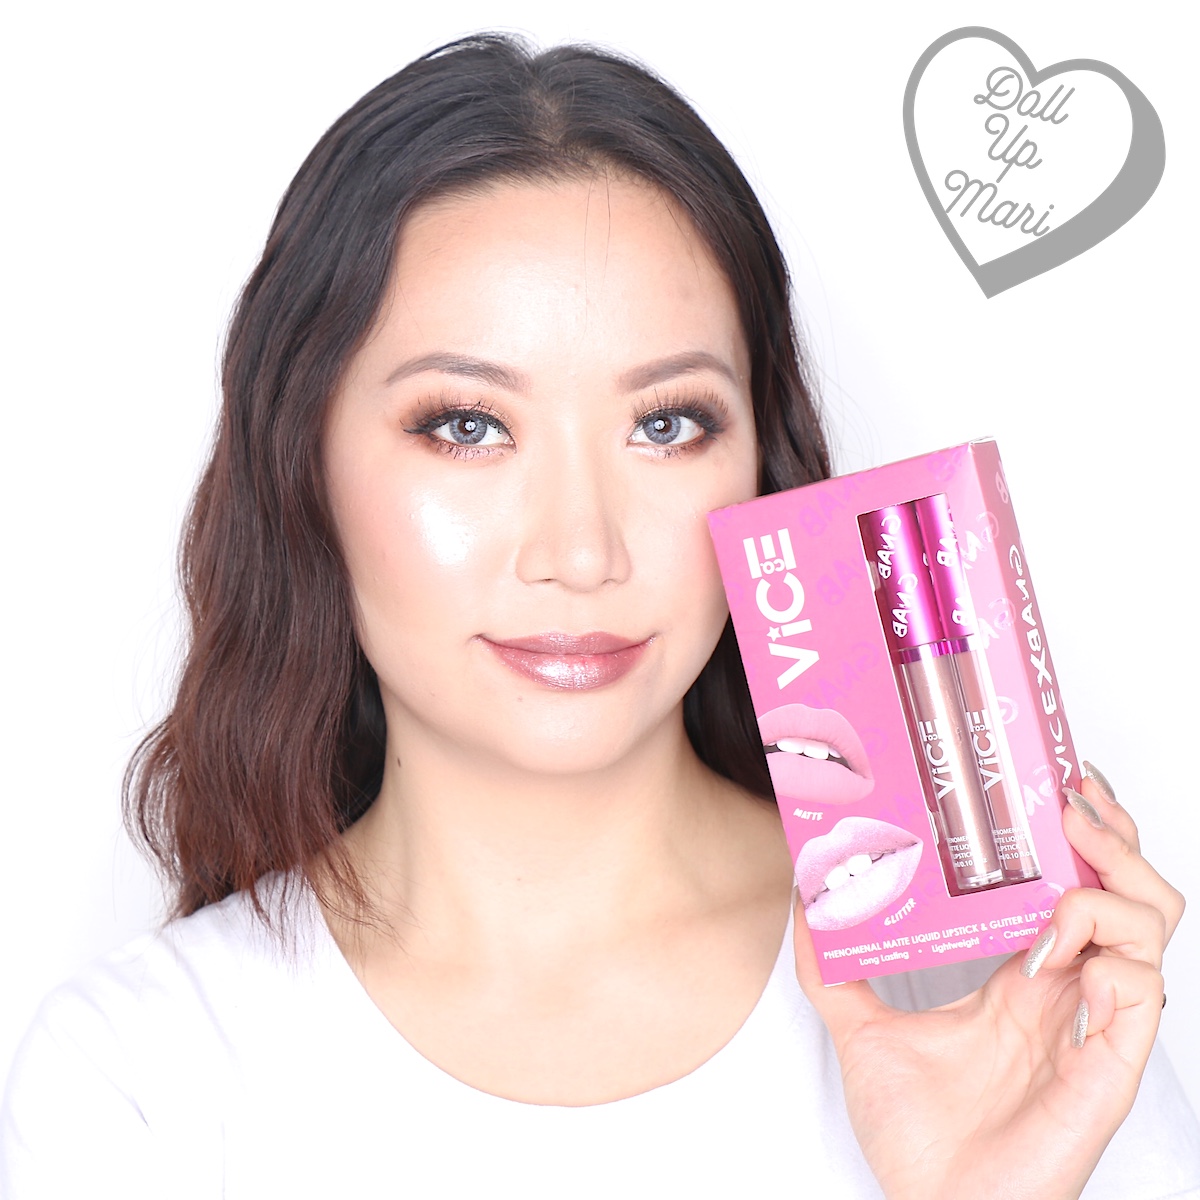 Mari wearing both matte liquid lipstick and glitter topper of the Saveeeh set of Vice X Bang lip set collection